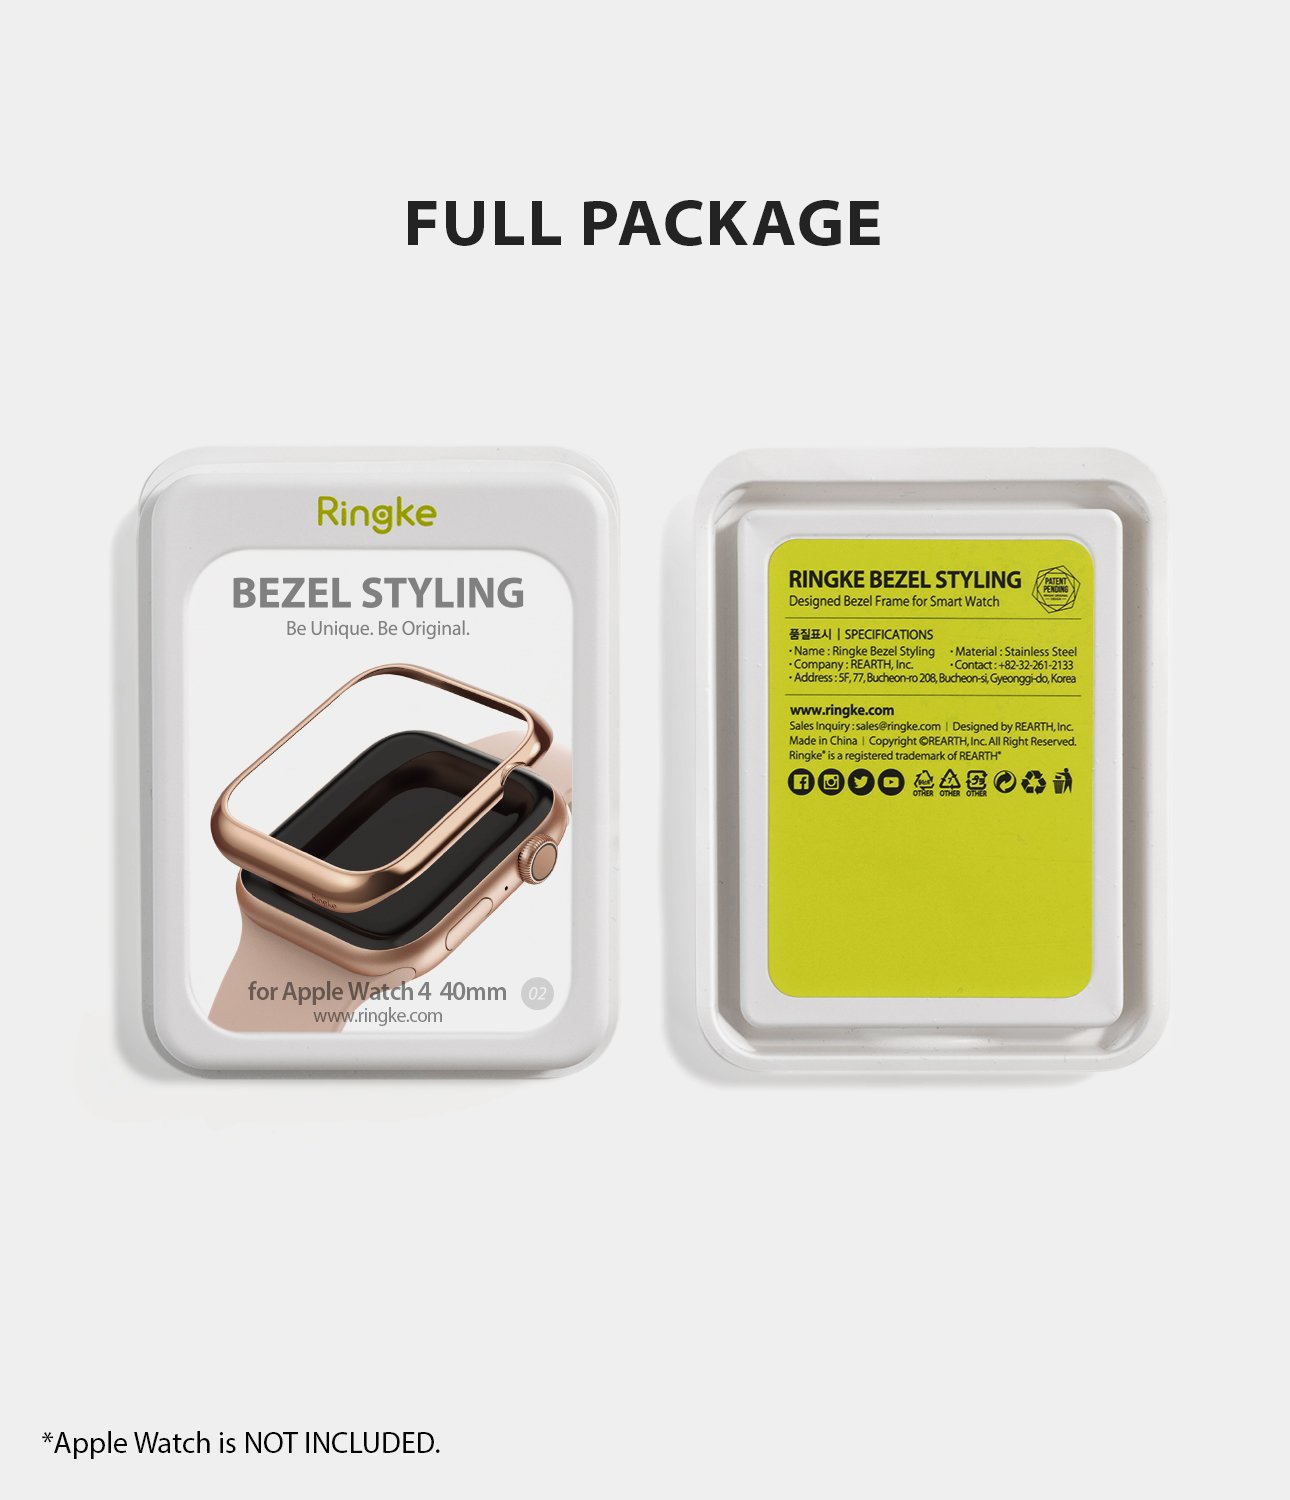 ringke bezel styling 40-02 rose gold stainless steel on apple watch series 6 / 5 / 4 / SE 40mm full package